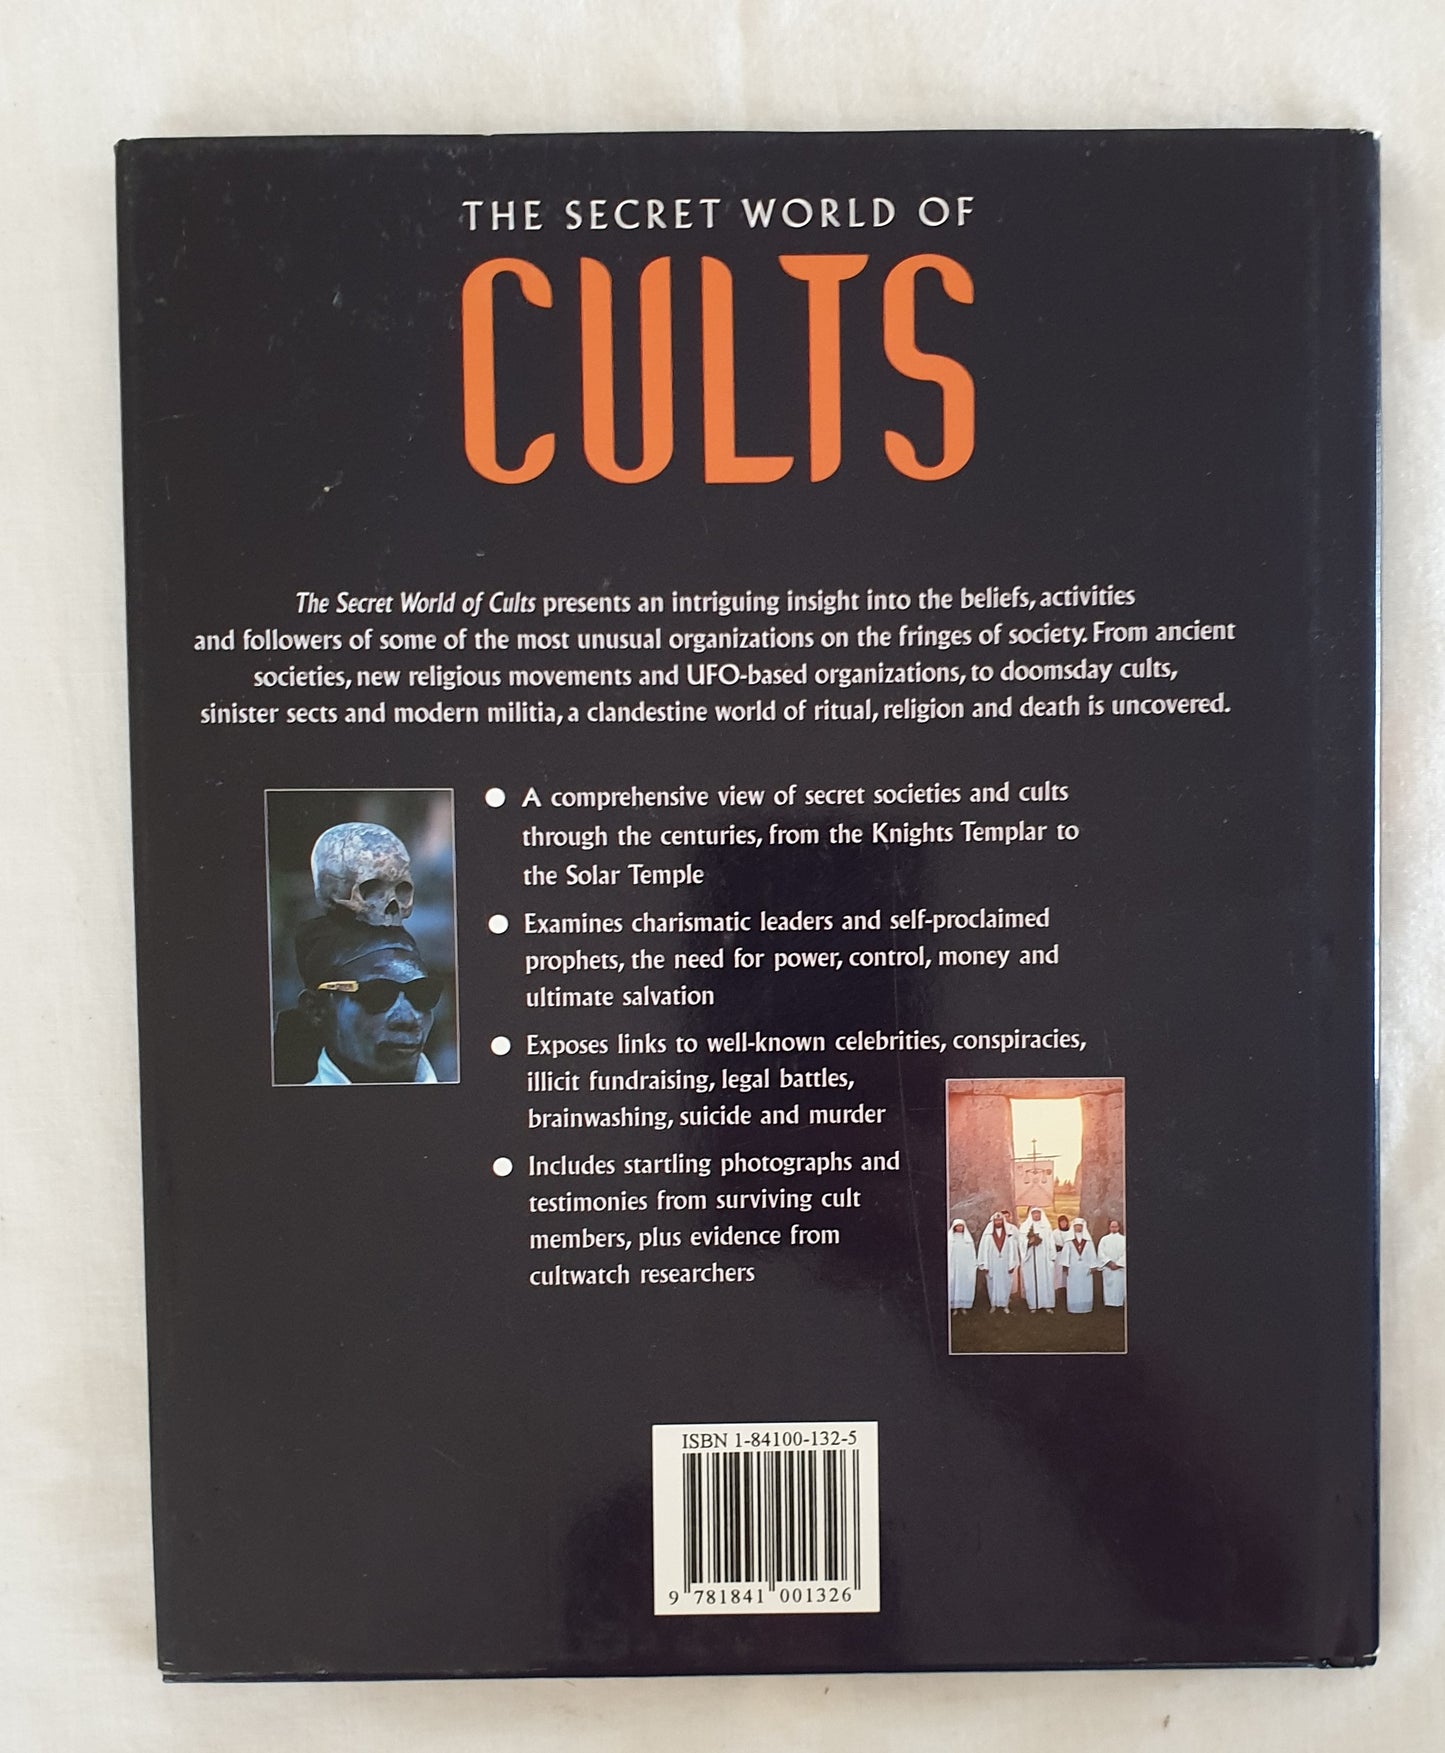 The Secret World of Cults by Sarah Moran